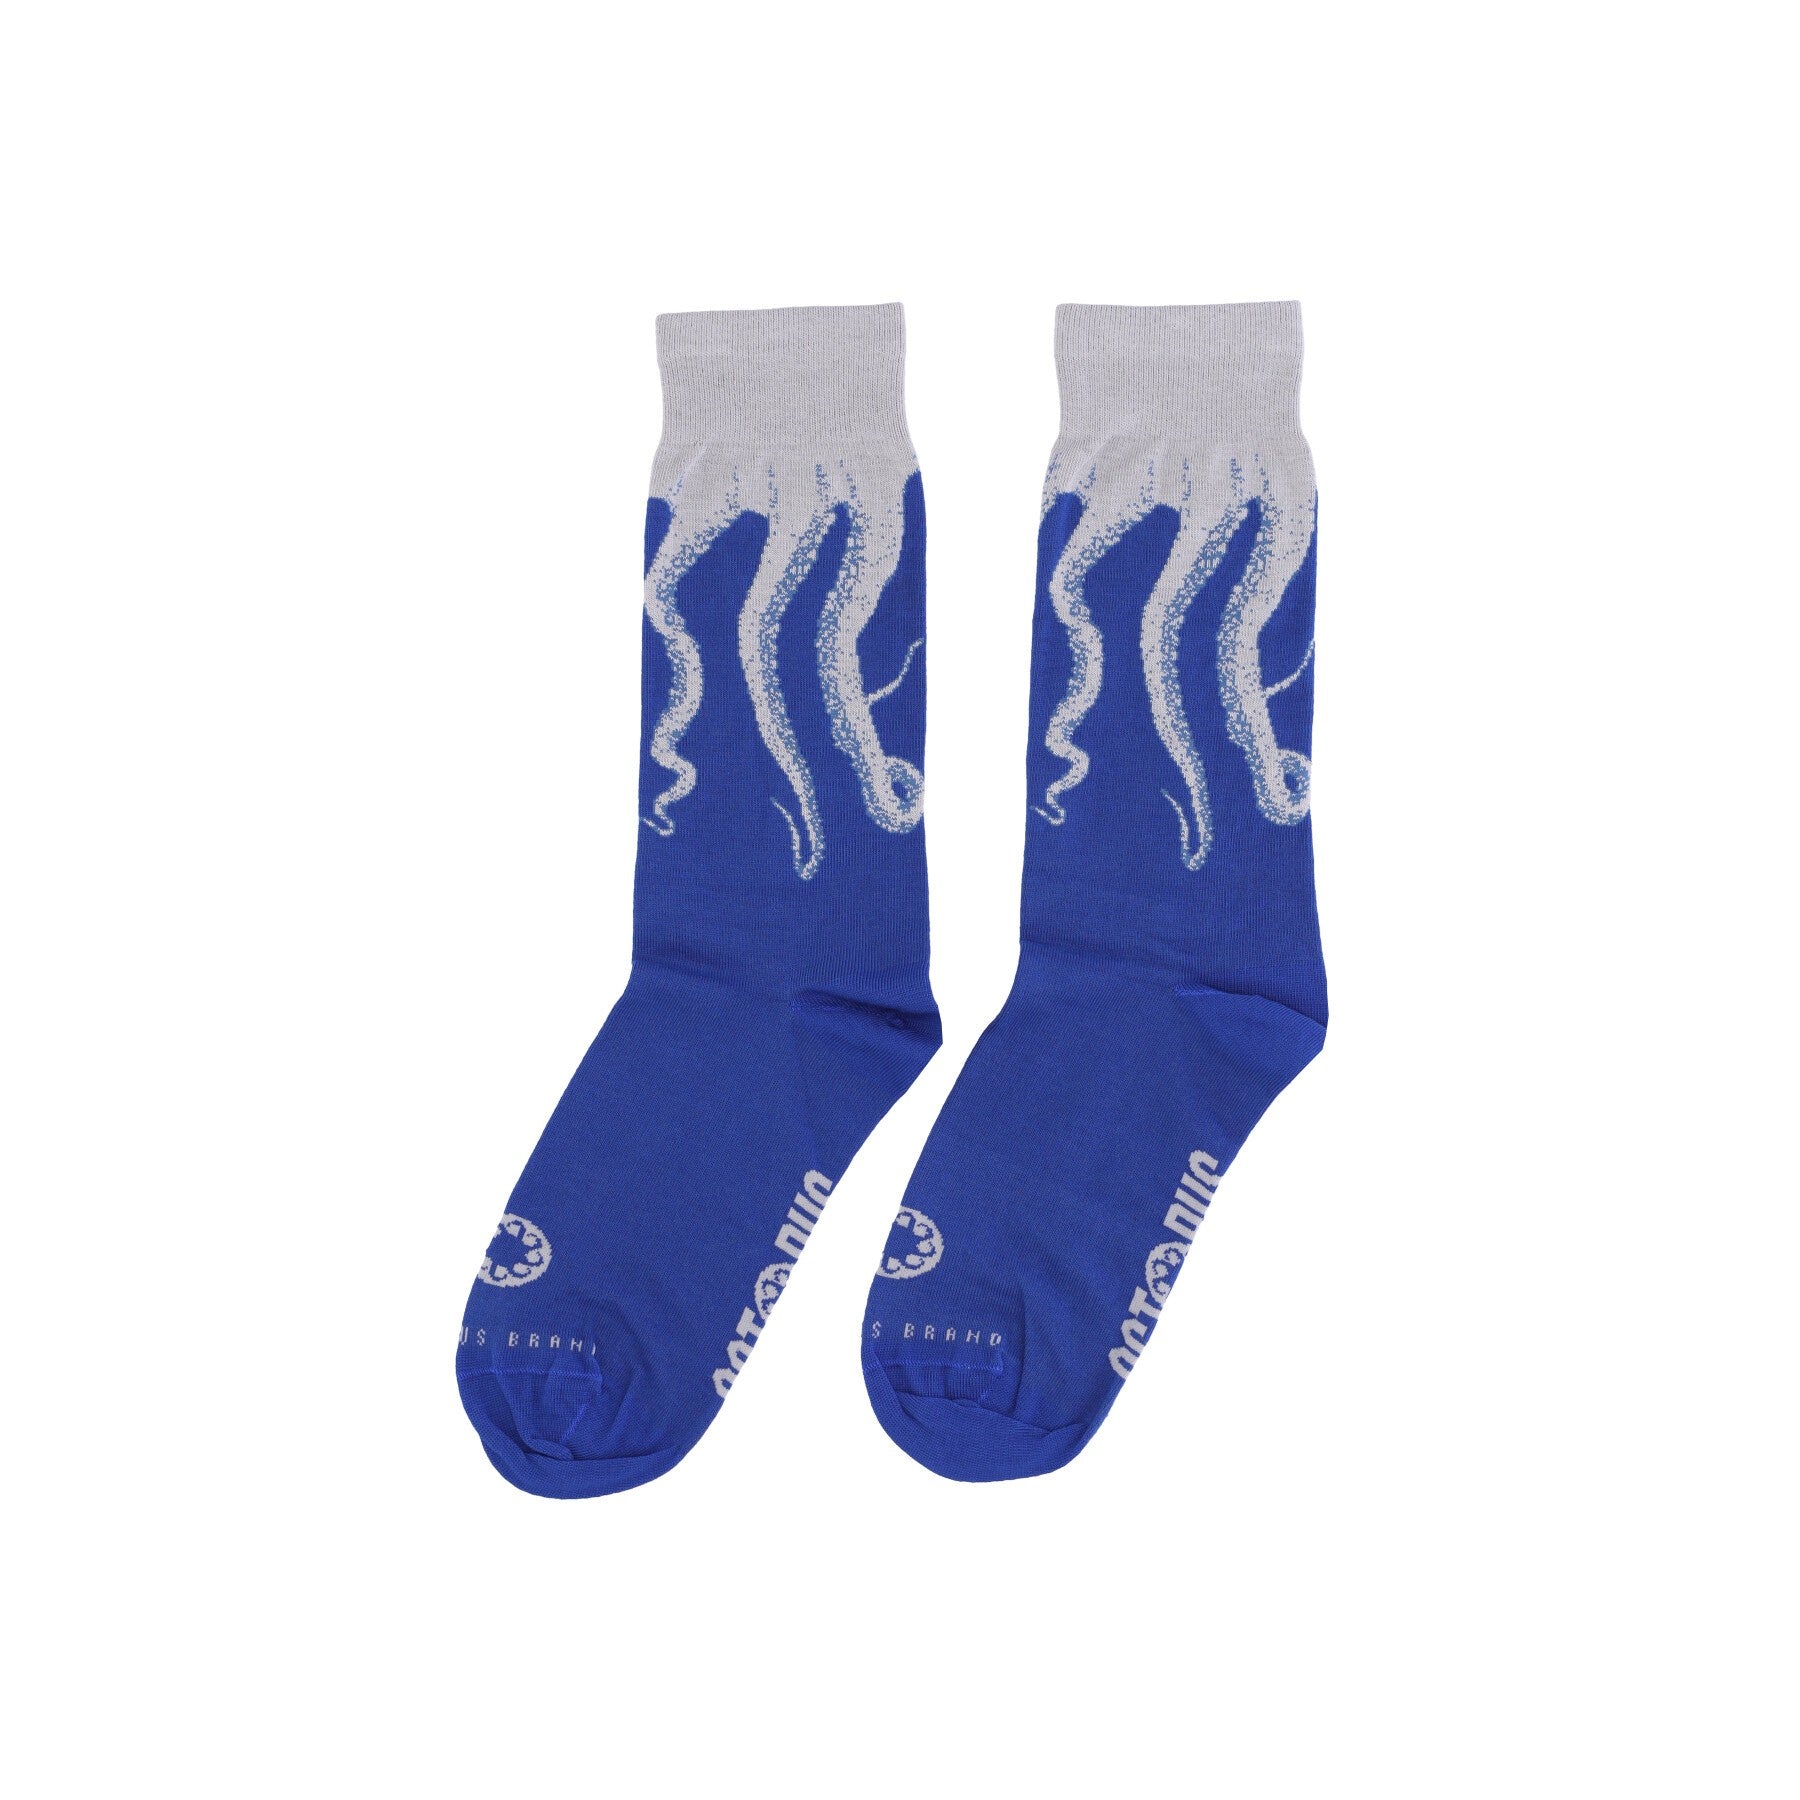 Octopus, Calza Media Uomo Octopus Original Socks, Grey/blue